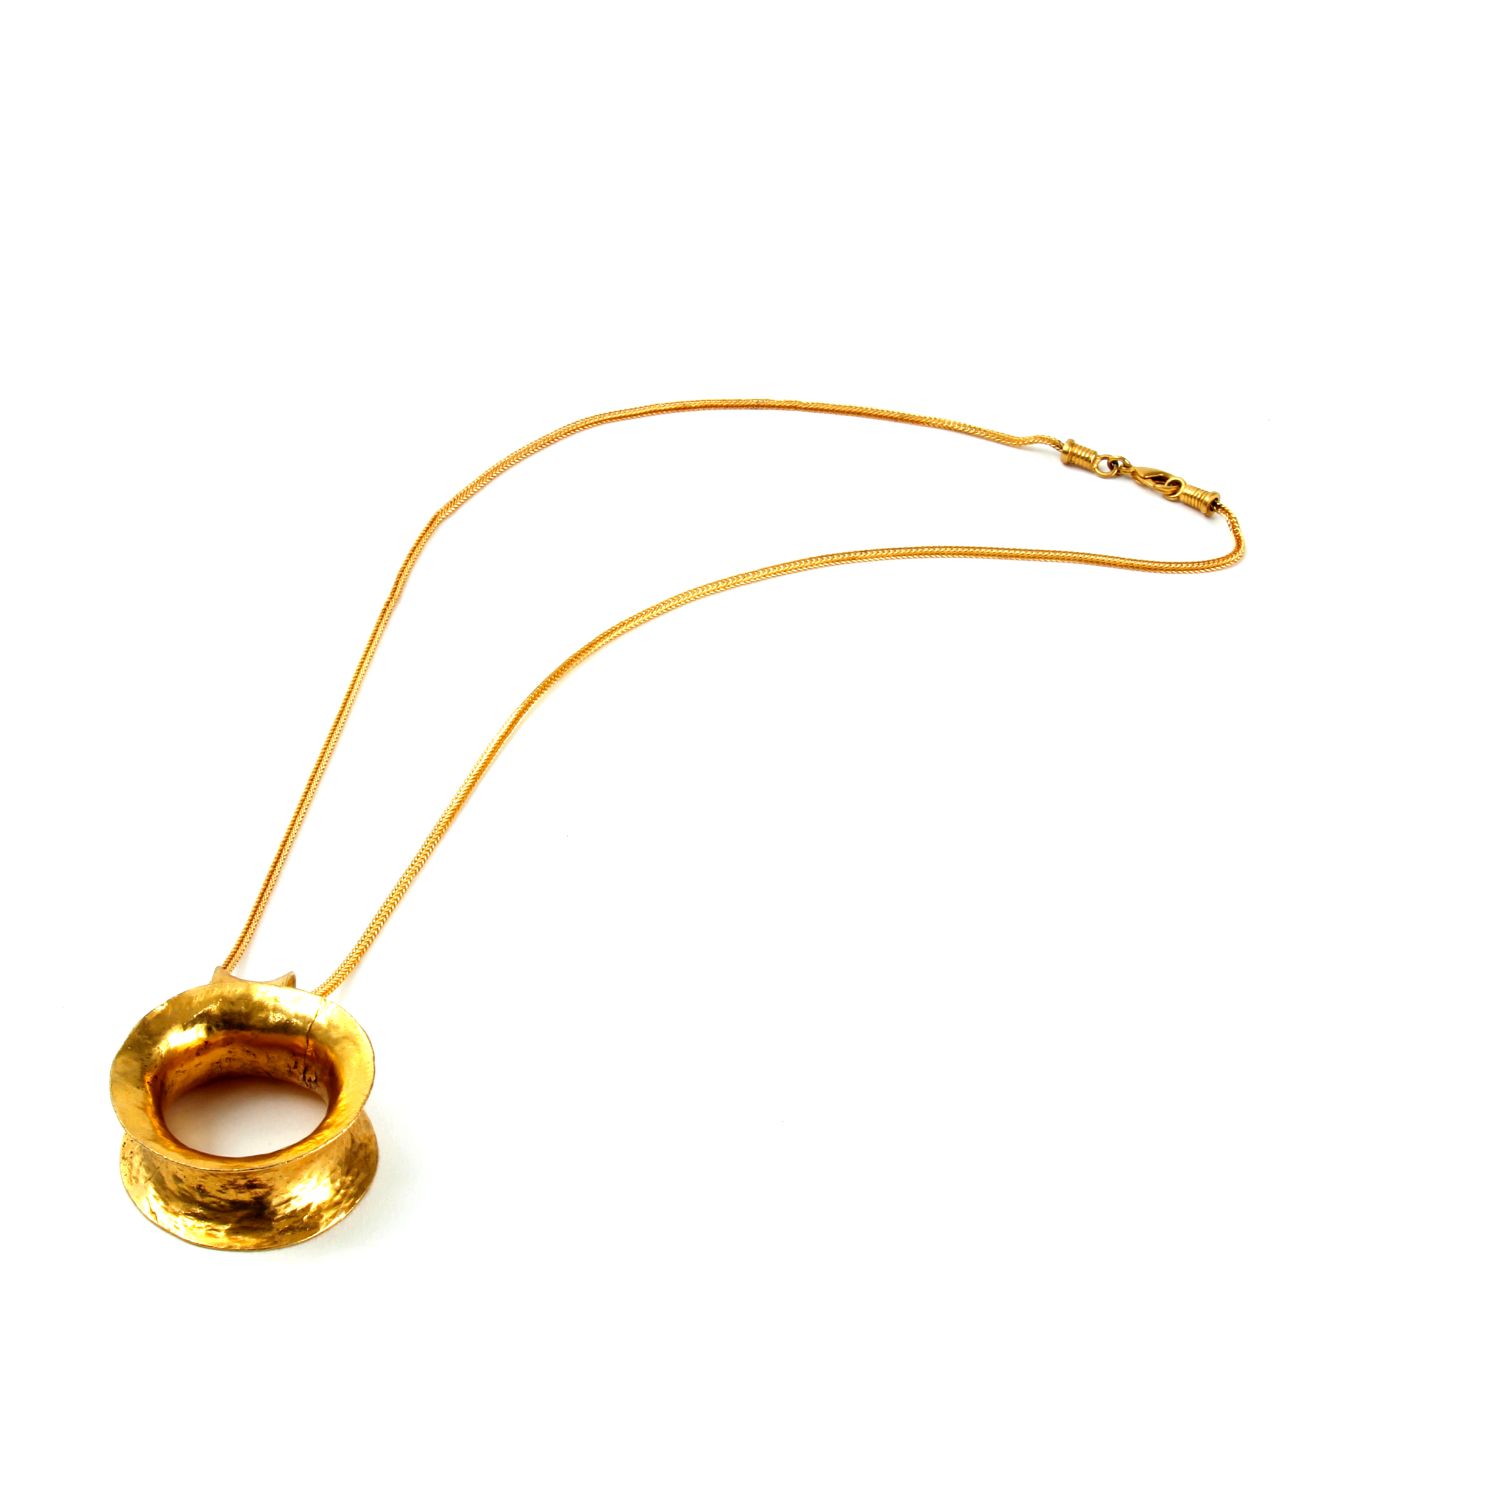 Elisabeth Riveiro: Necklace with Pendant Product Image 1 of 2